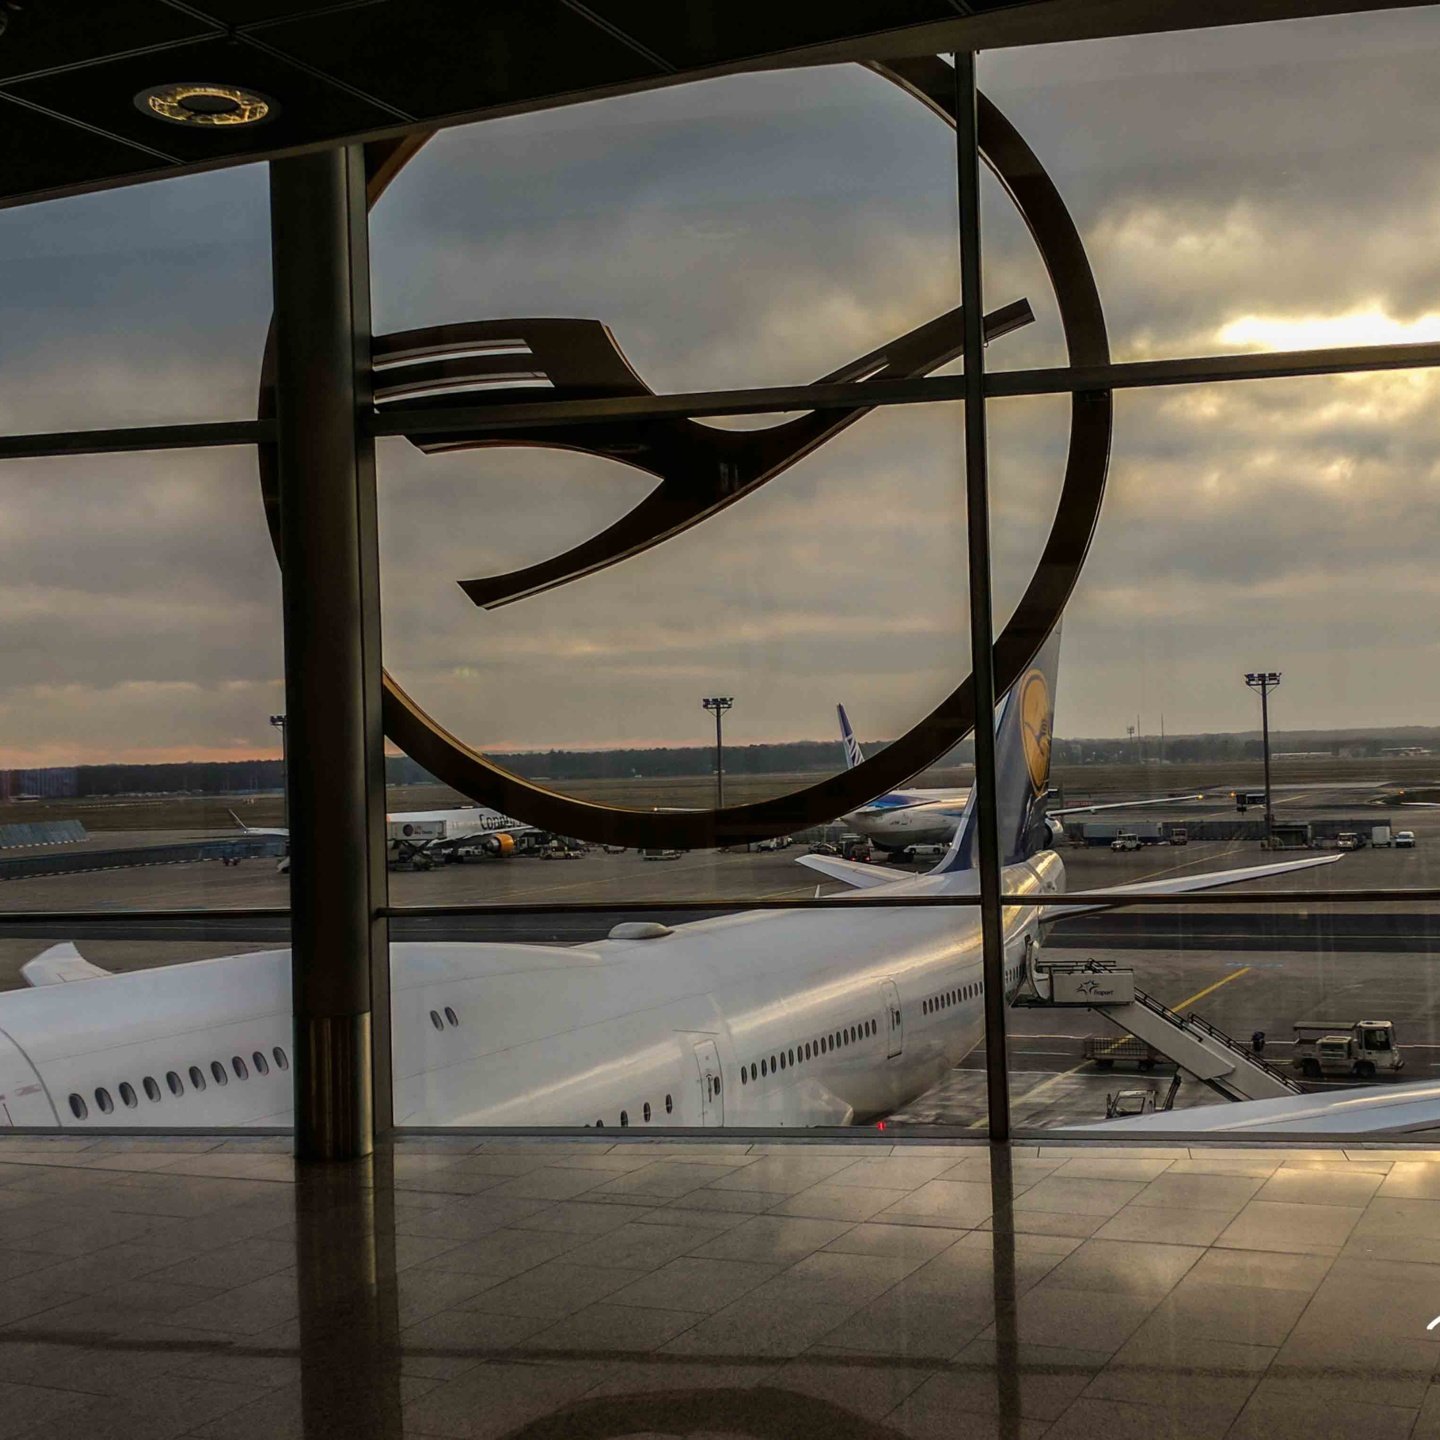 Review: Lufthansa Business Class Lounge – Gate B21